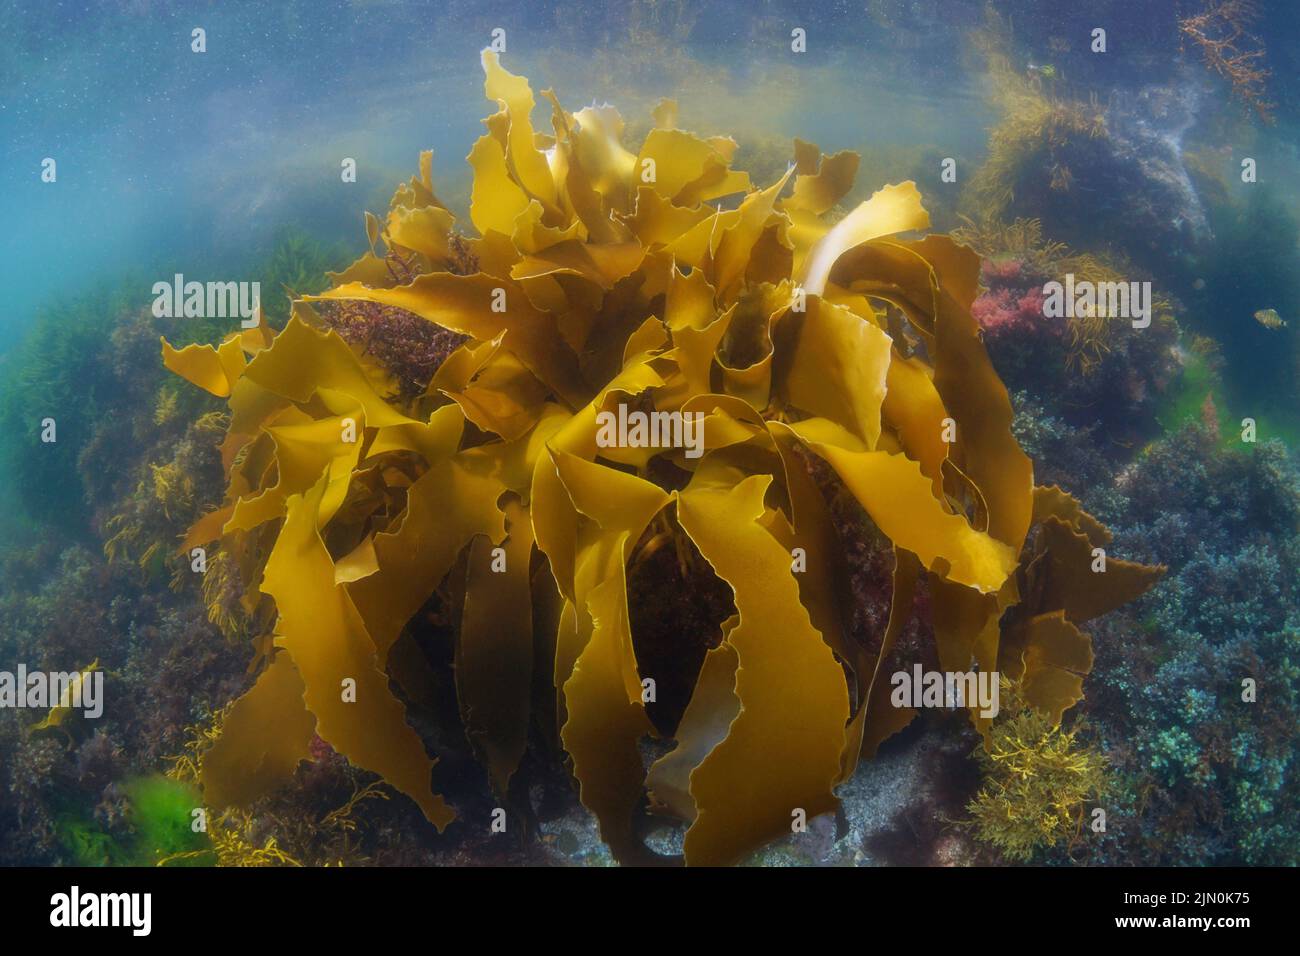 Alga Golden kelp underwater in the Atlantic ocean (Laminaria ochroleuca seaweed), Spain Stock Photo